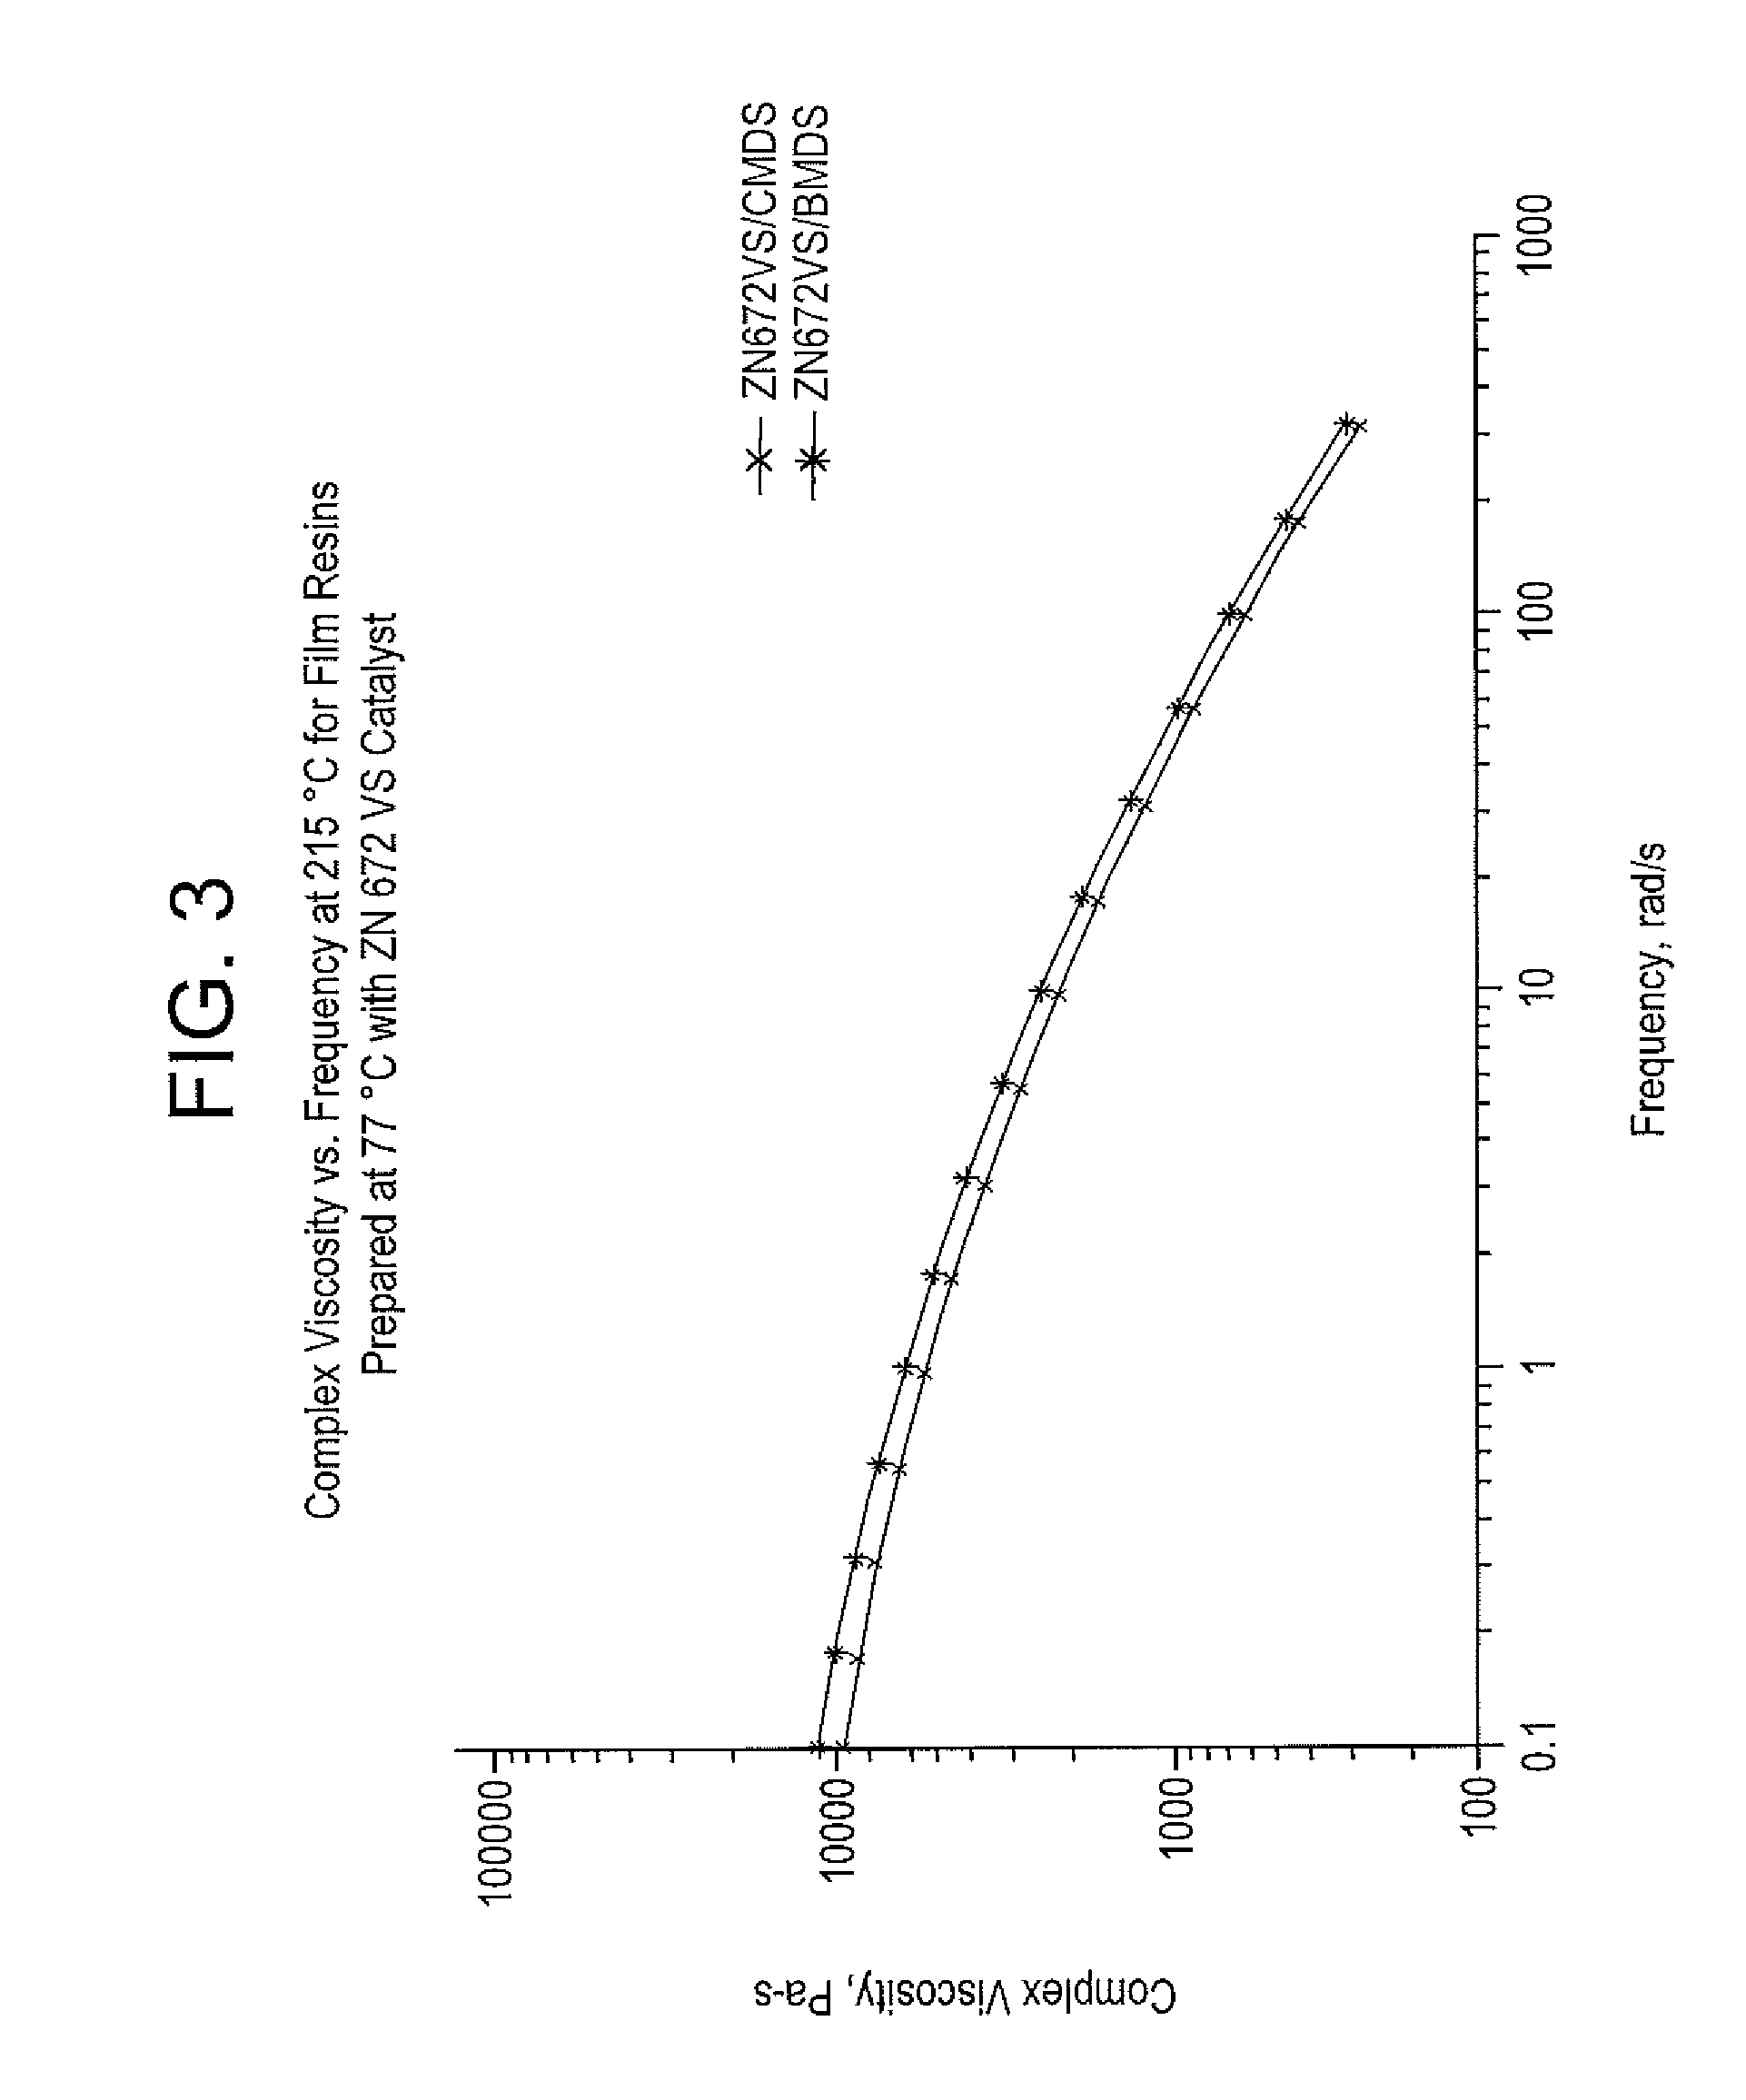 Succinate-Containing Polymerization Catalyst System Using n-Butylmethyldimethoxysilane for Preparation of Polypropylene Film Grade Resins